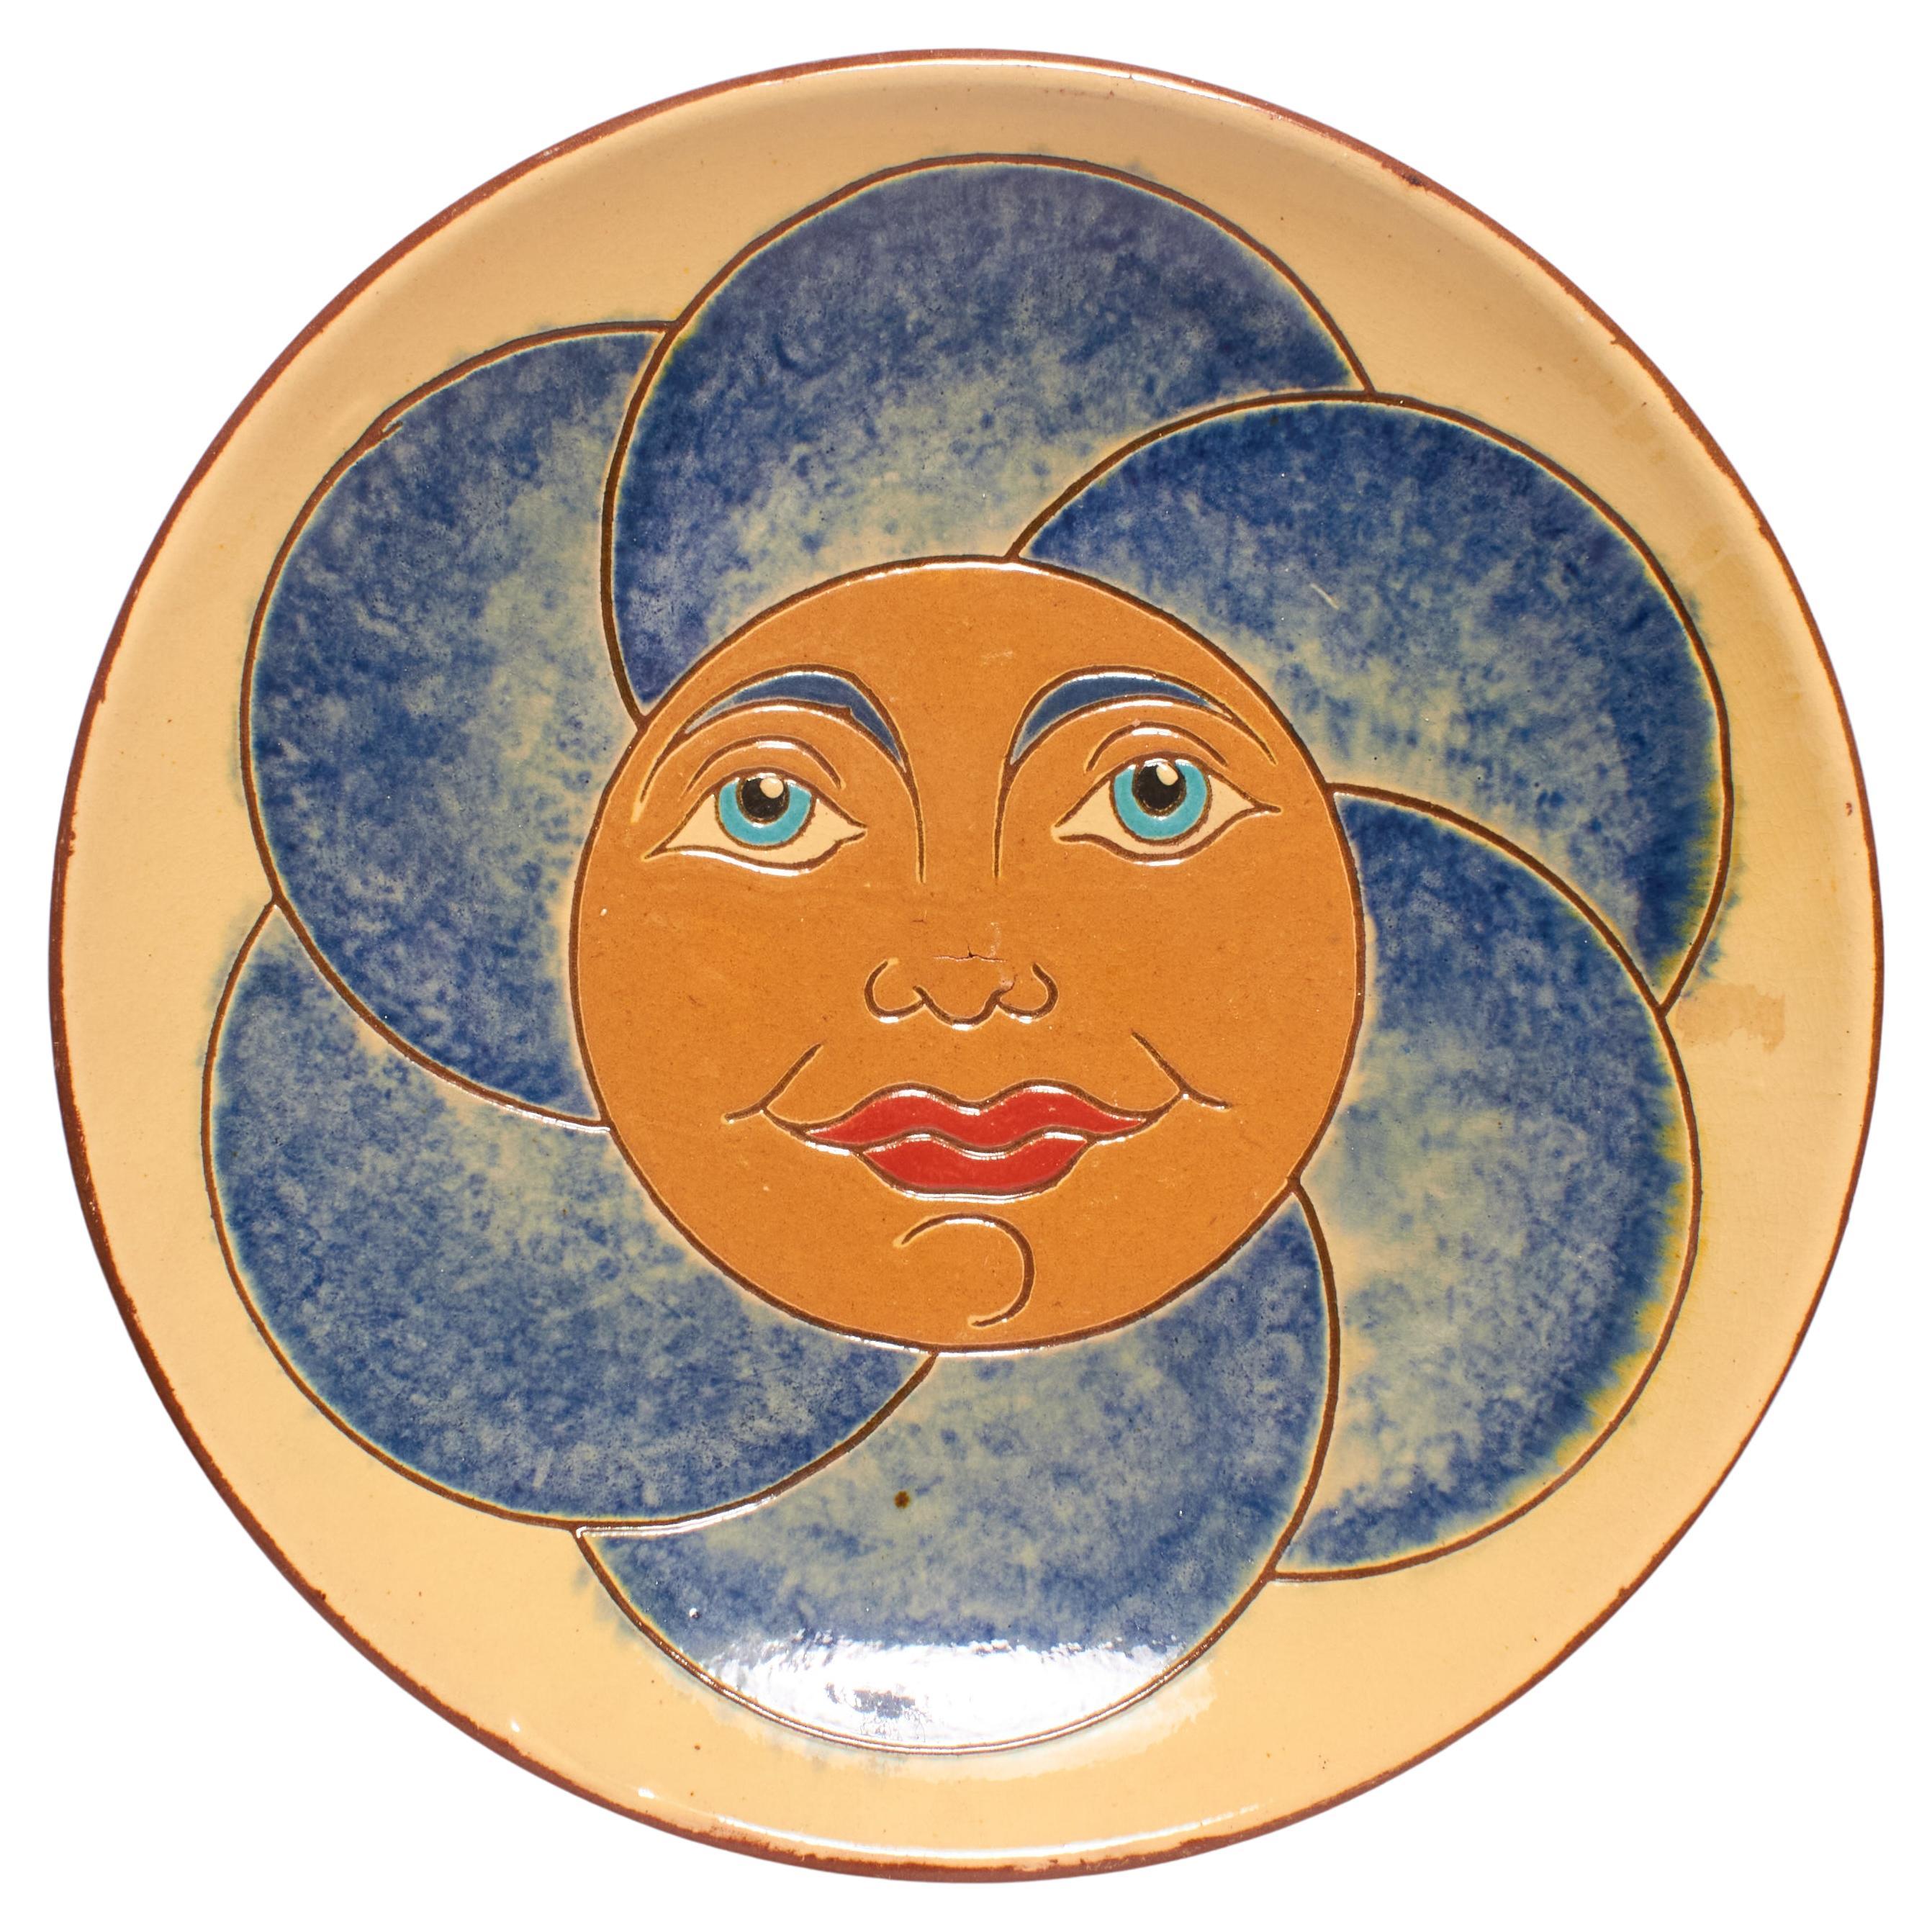 Vintage 1960 Hand-Painted Blue, Orange Ceramic Plate by Artist Diaz Costa For Sale